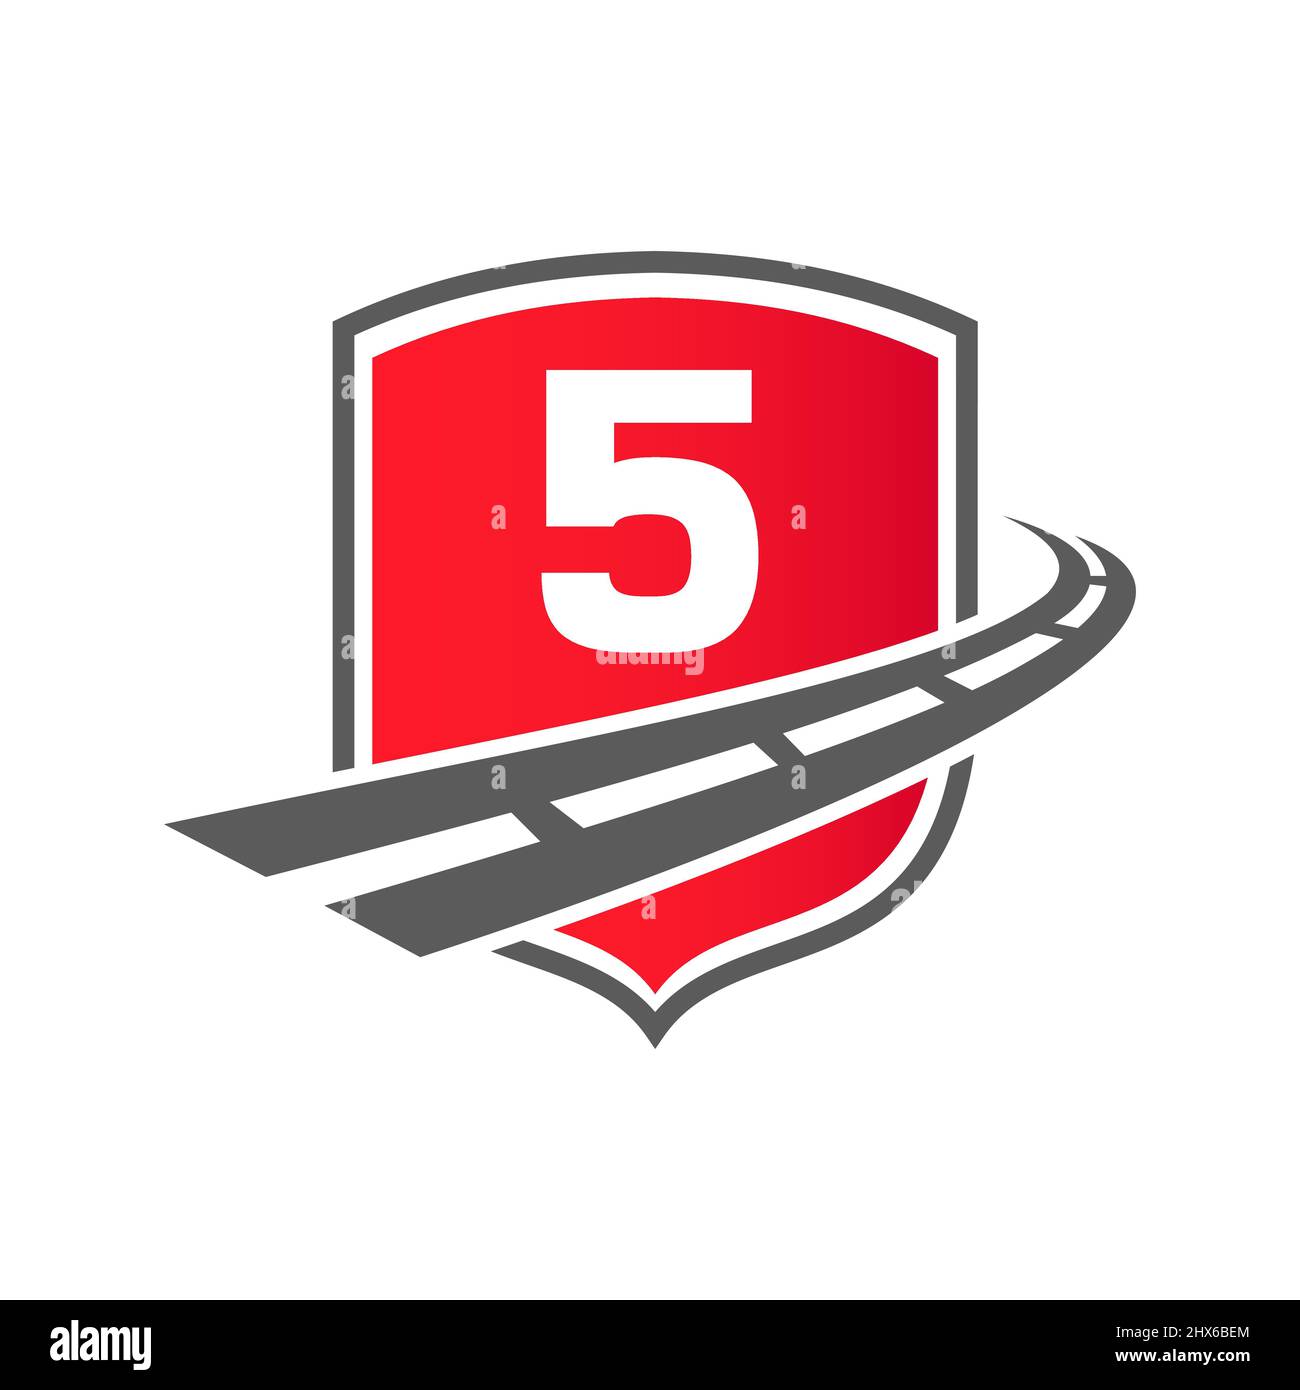 Transportlogo Mit Schild-Konzept Auf Brief 5 Konzept. 5 Letter Transportation Road Logo Design Frachtvorlage Stock Vektor